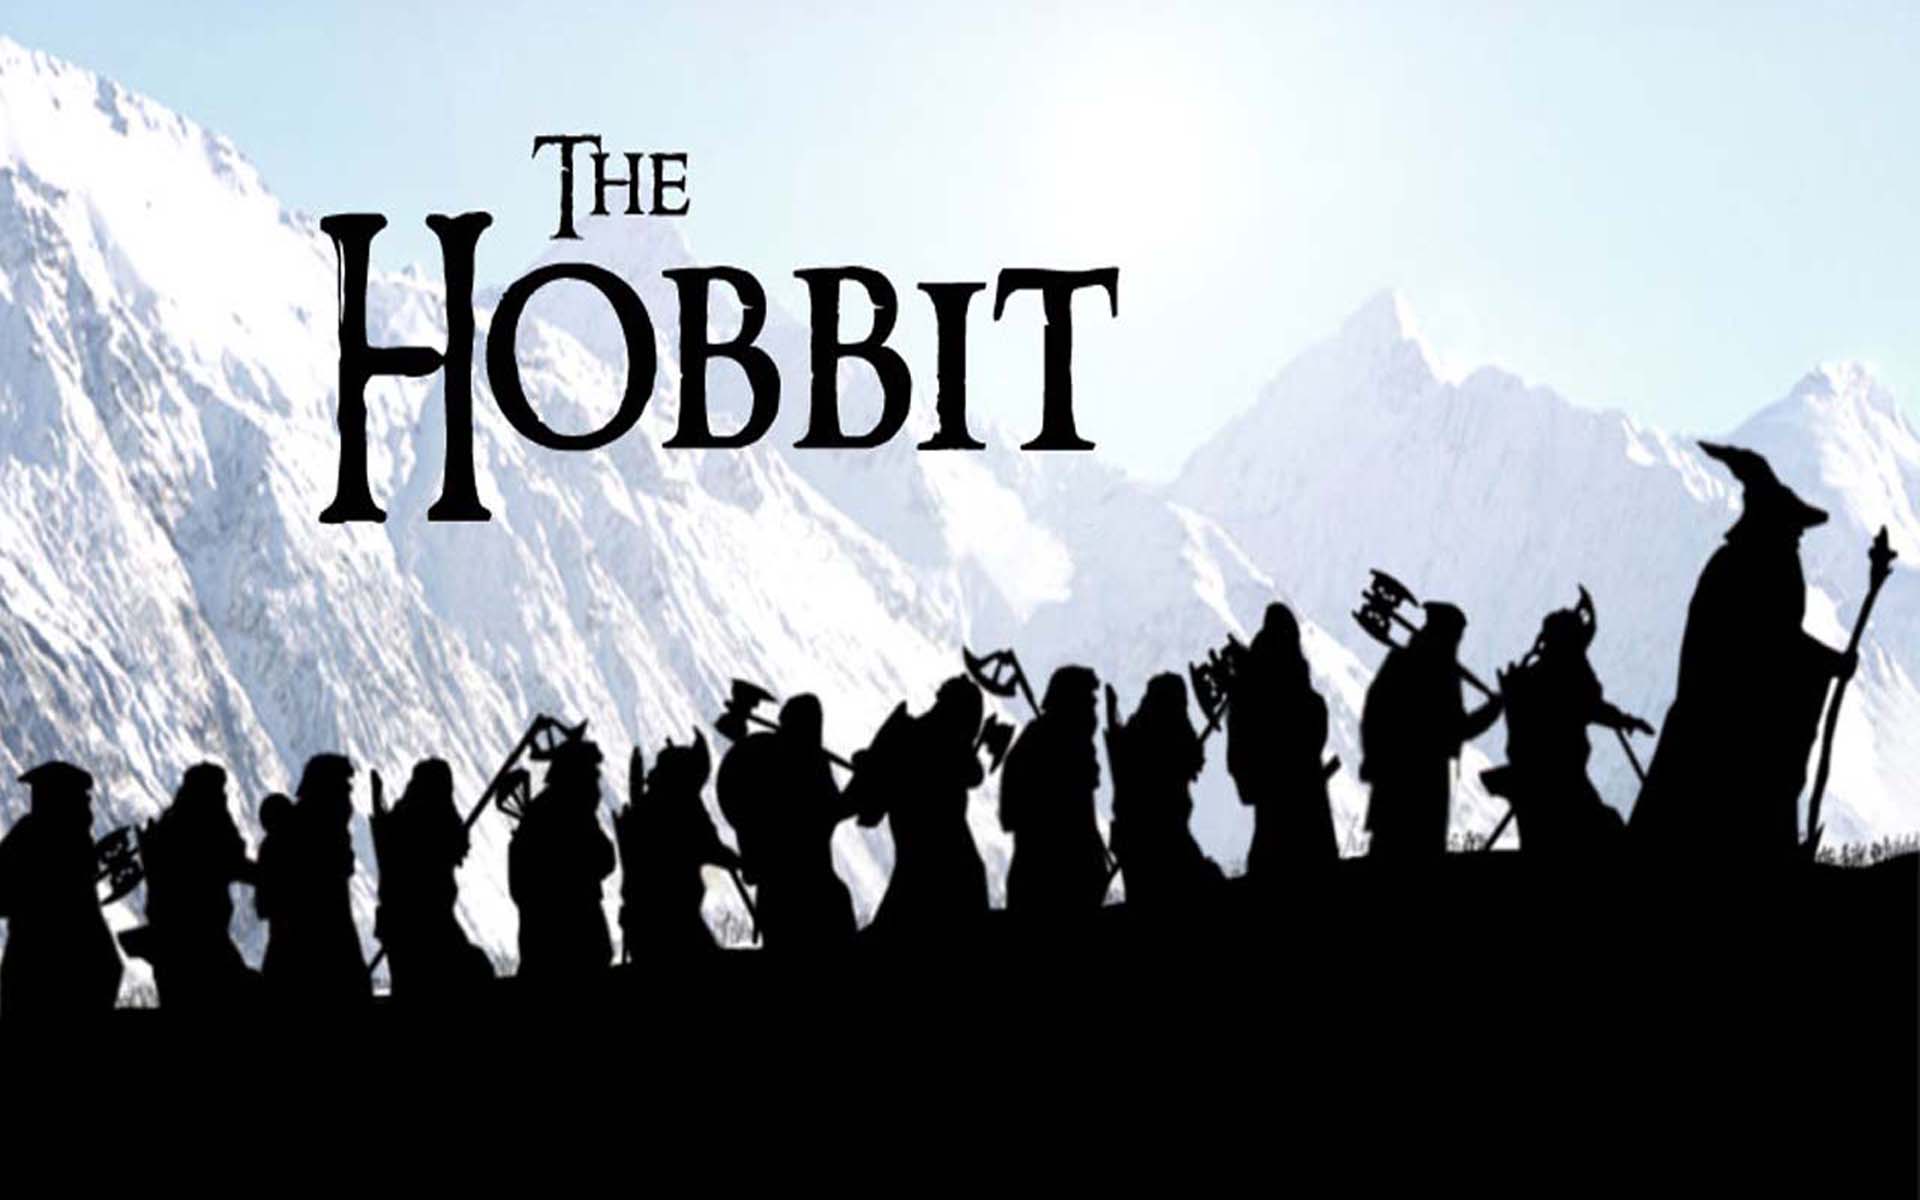 The hobbit background